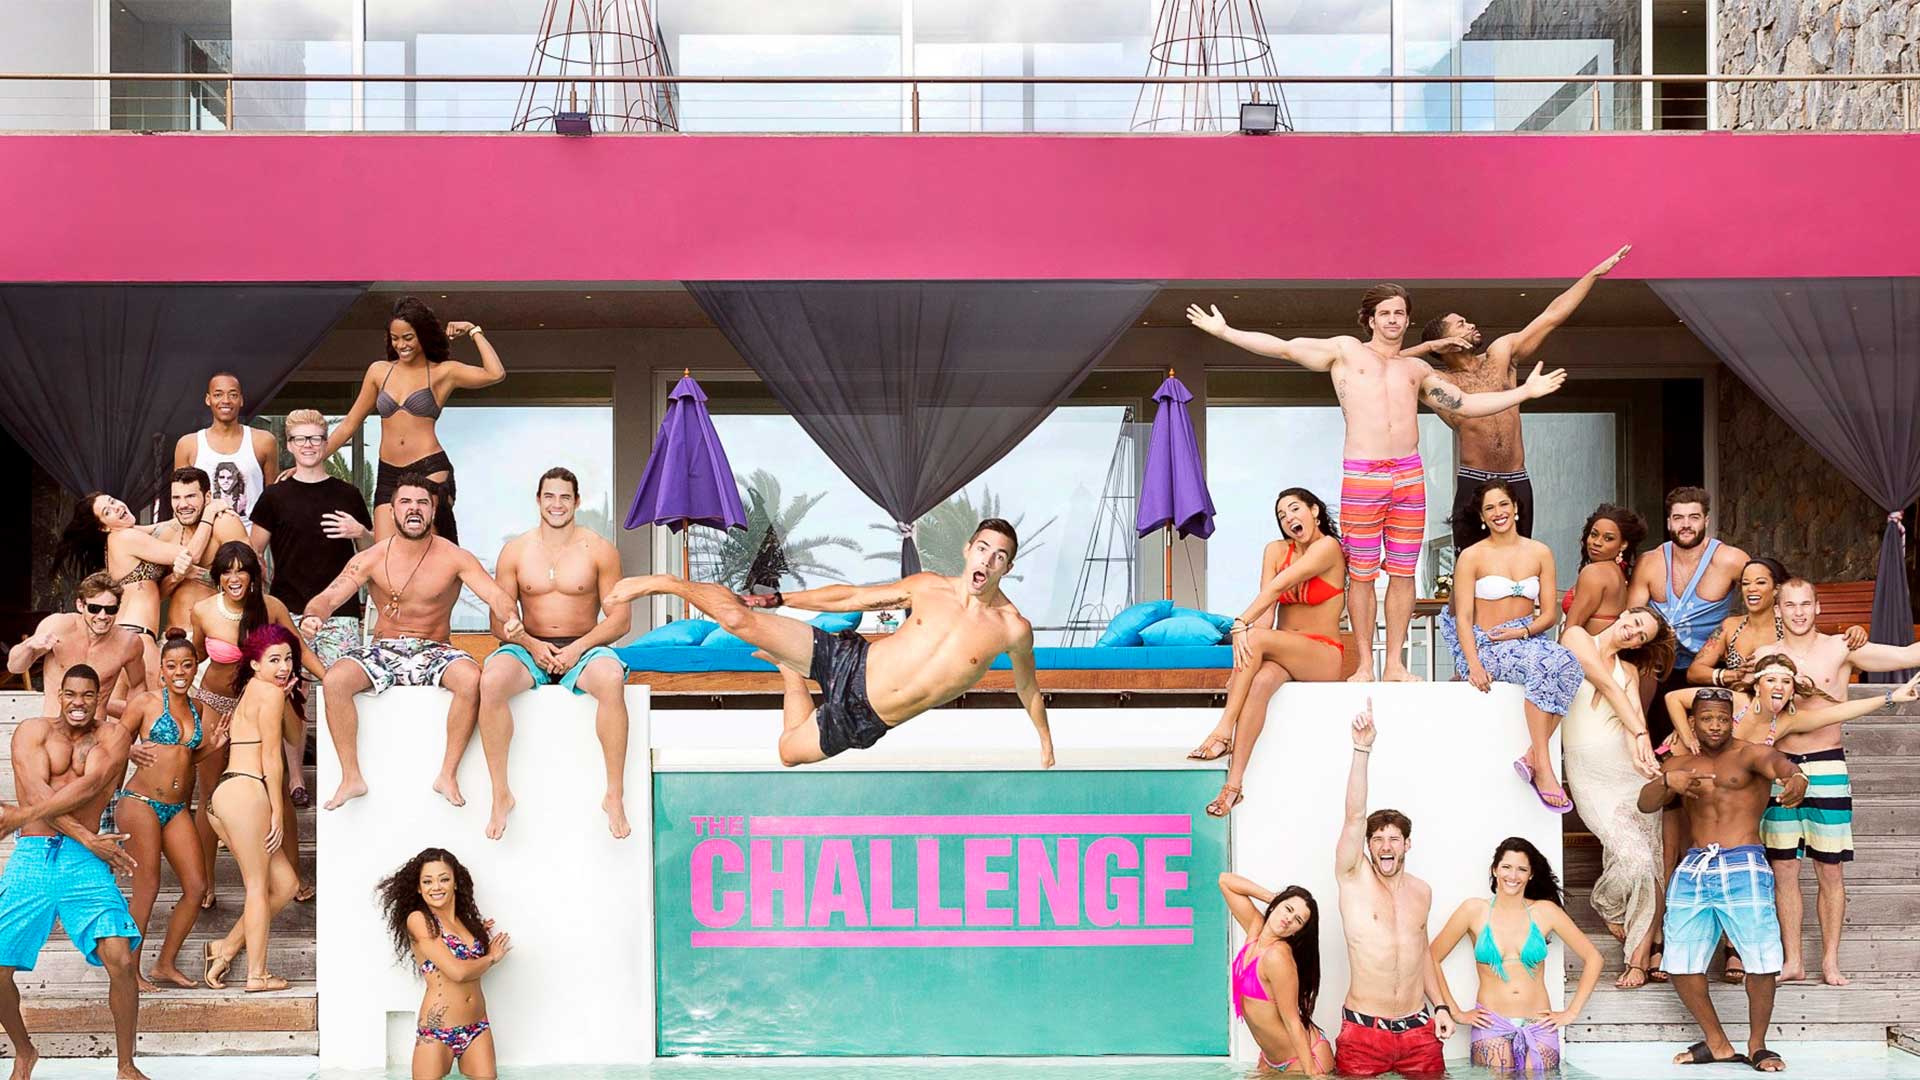 The Challenge MTV Drinking Game photo photo